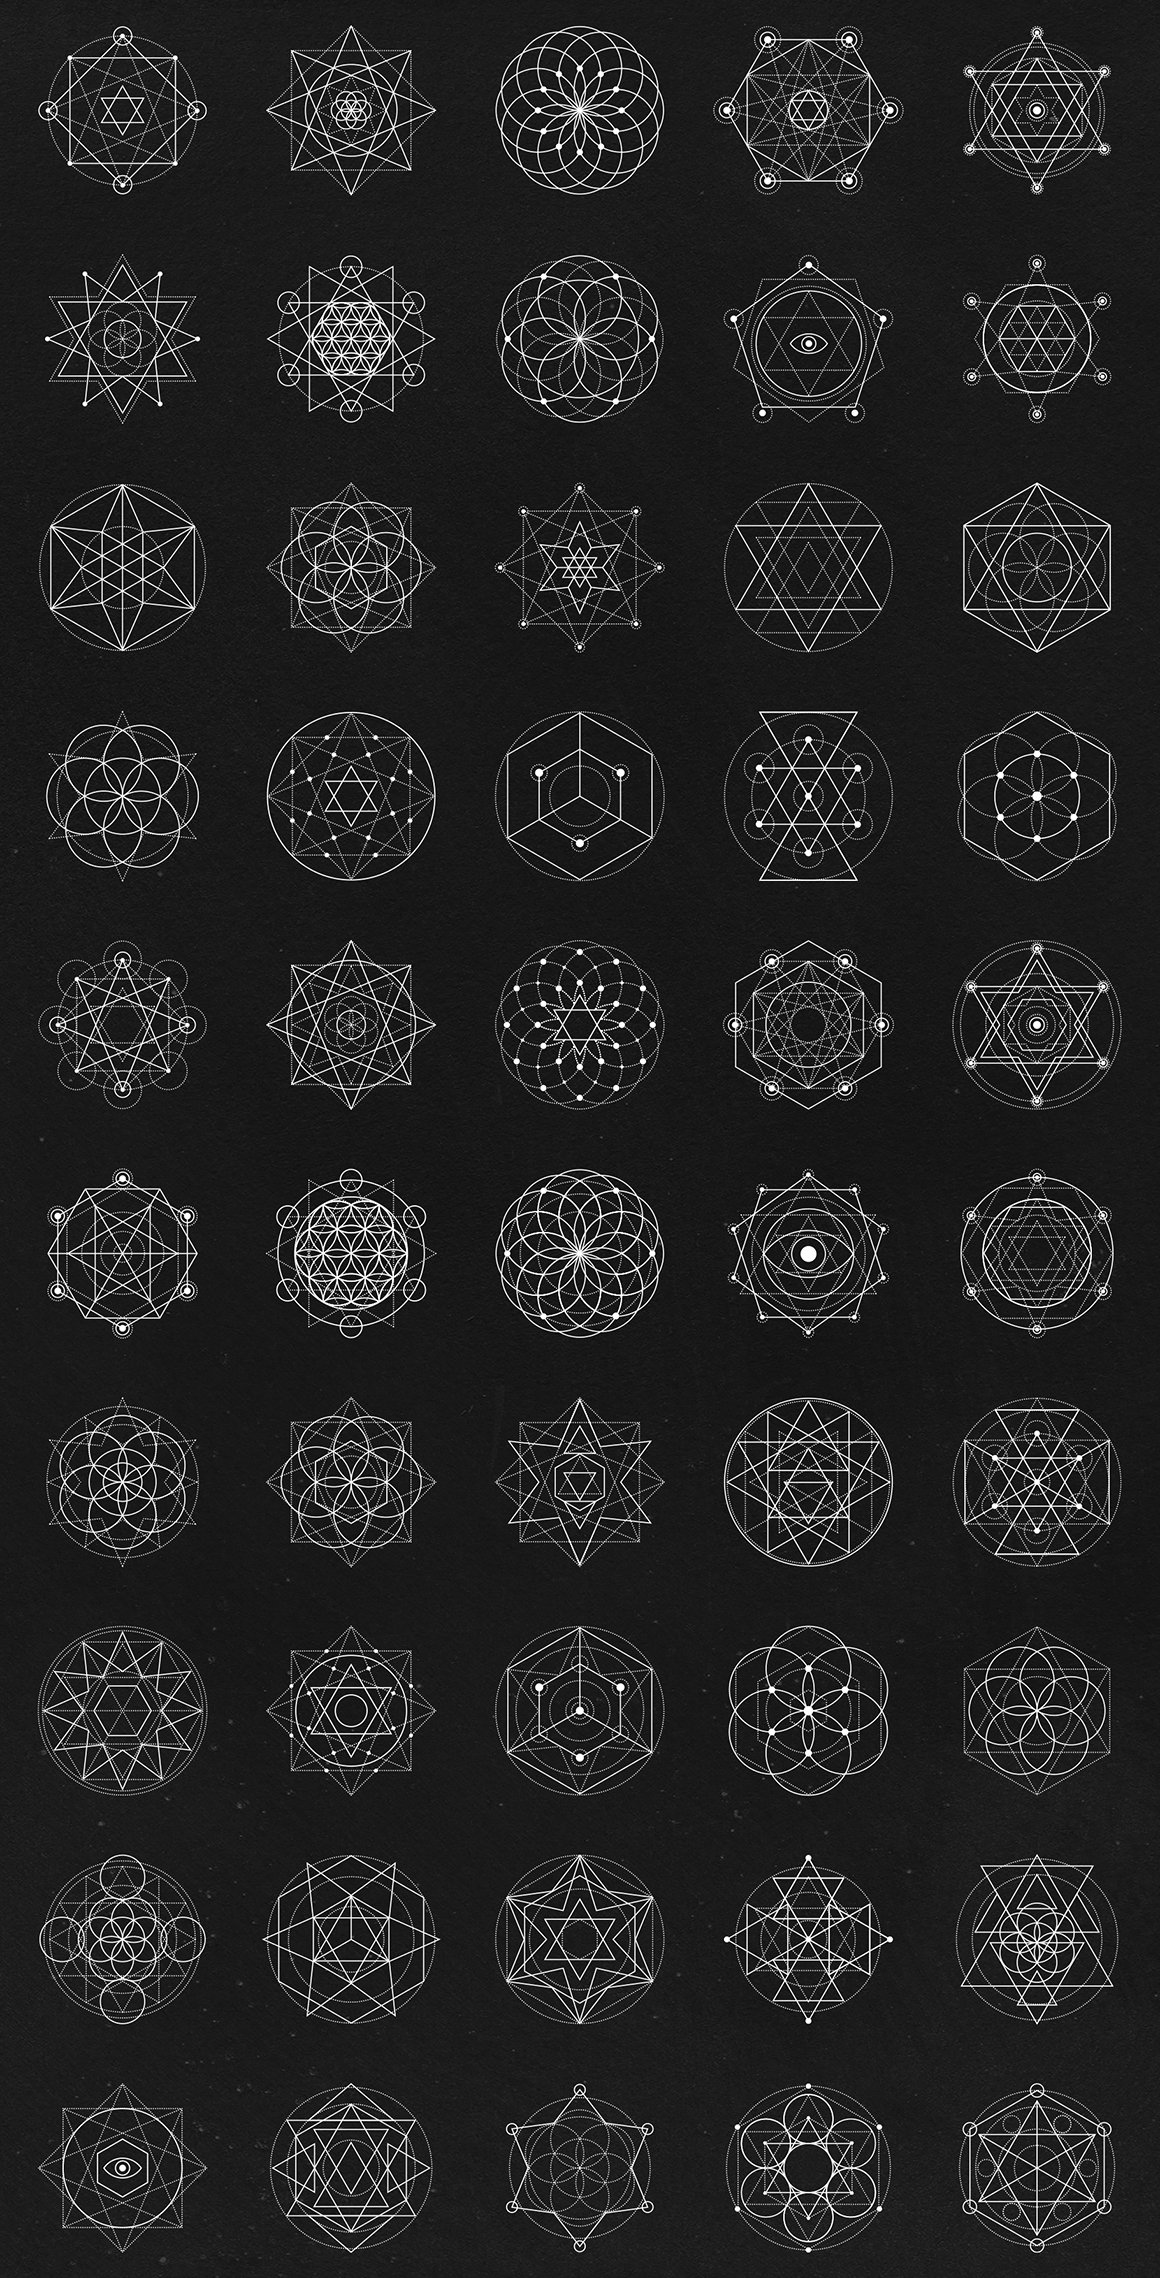 Sacred Geometry - 100 Vector Symbols